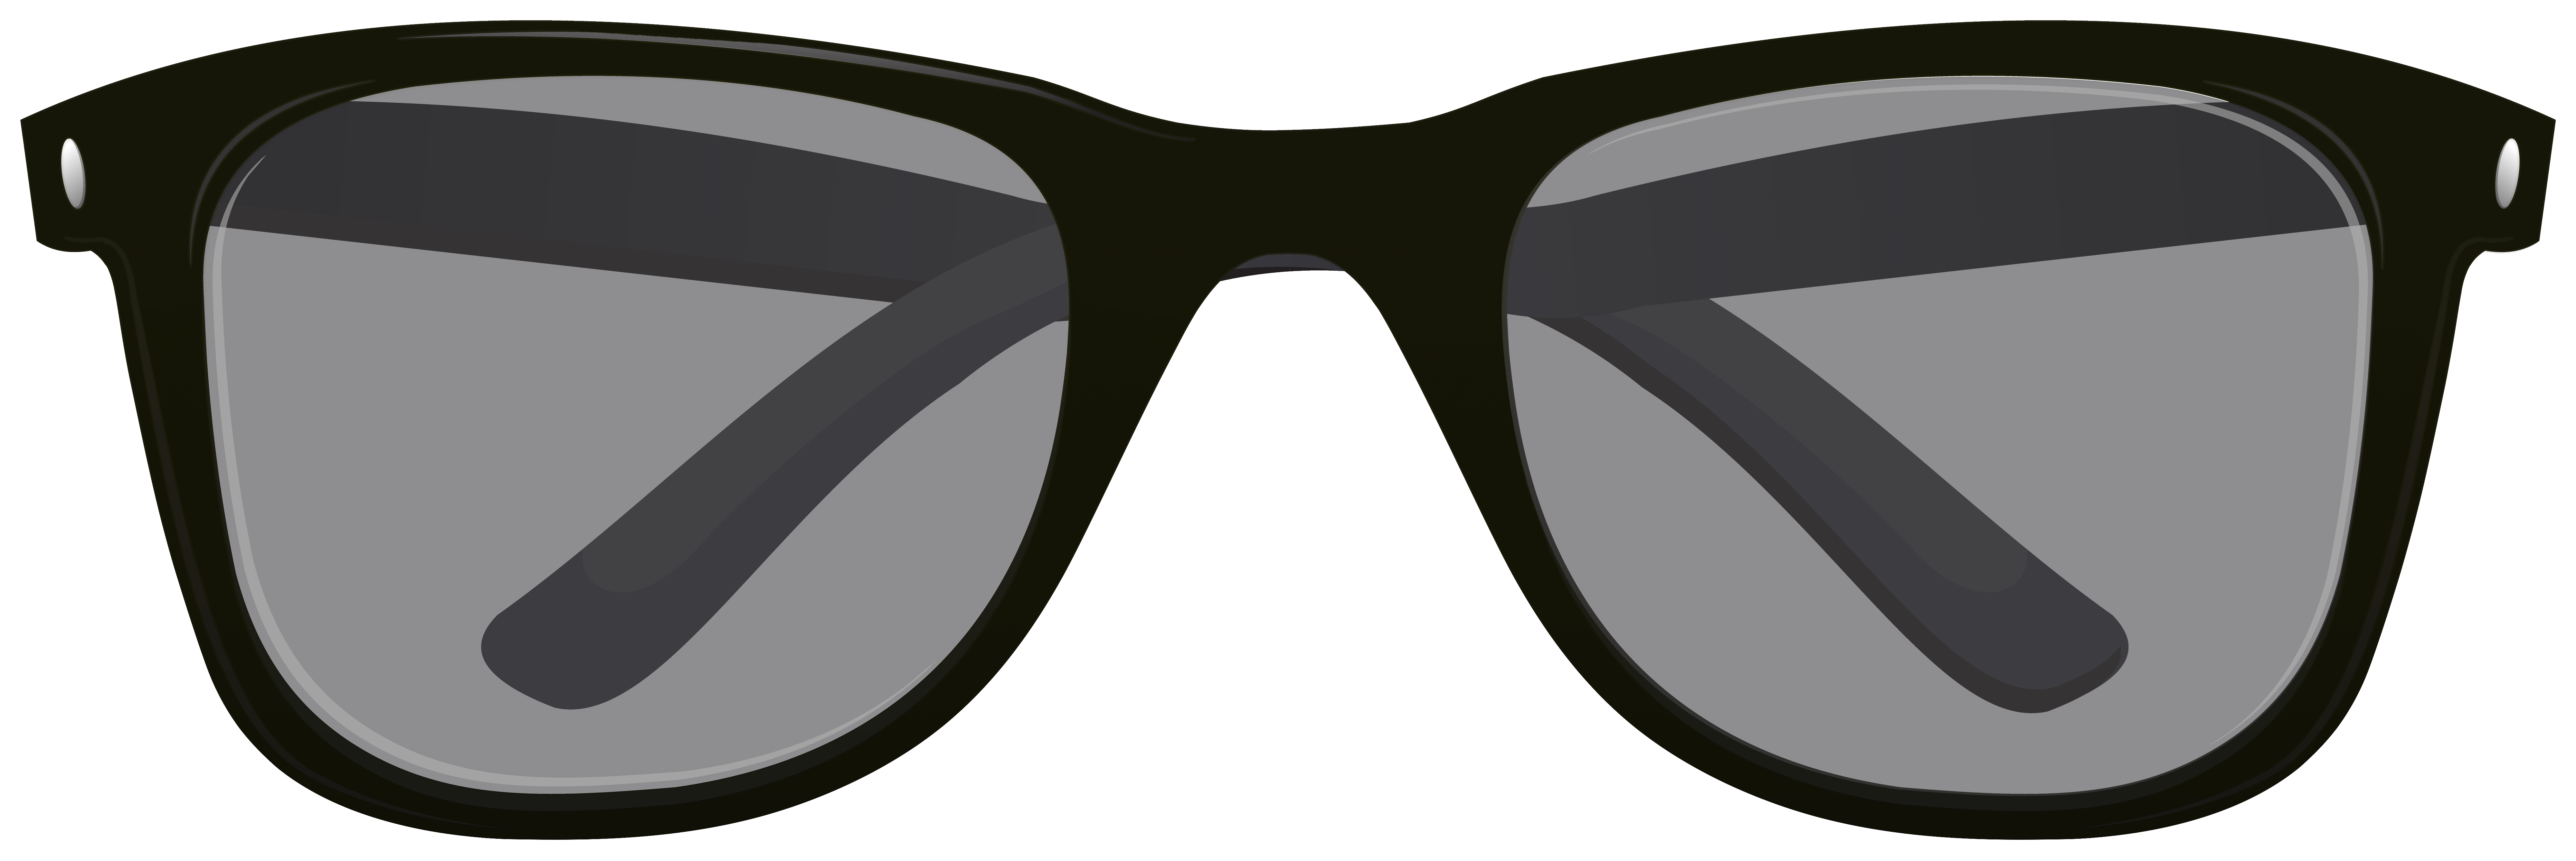 Black Sunglasses Clipart Image